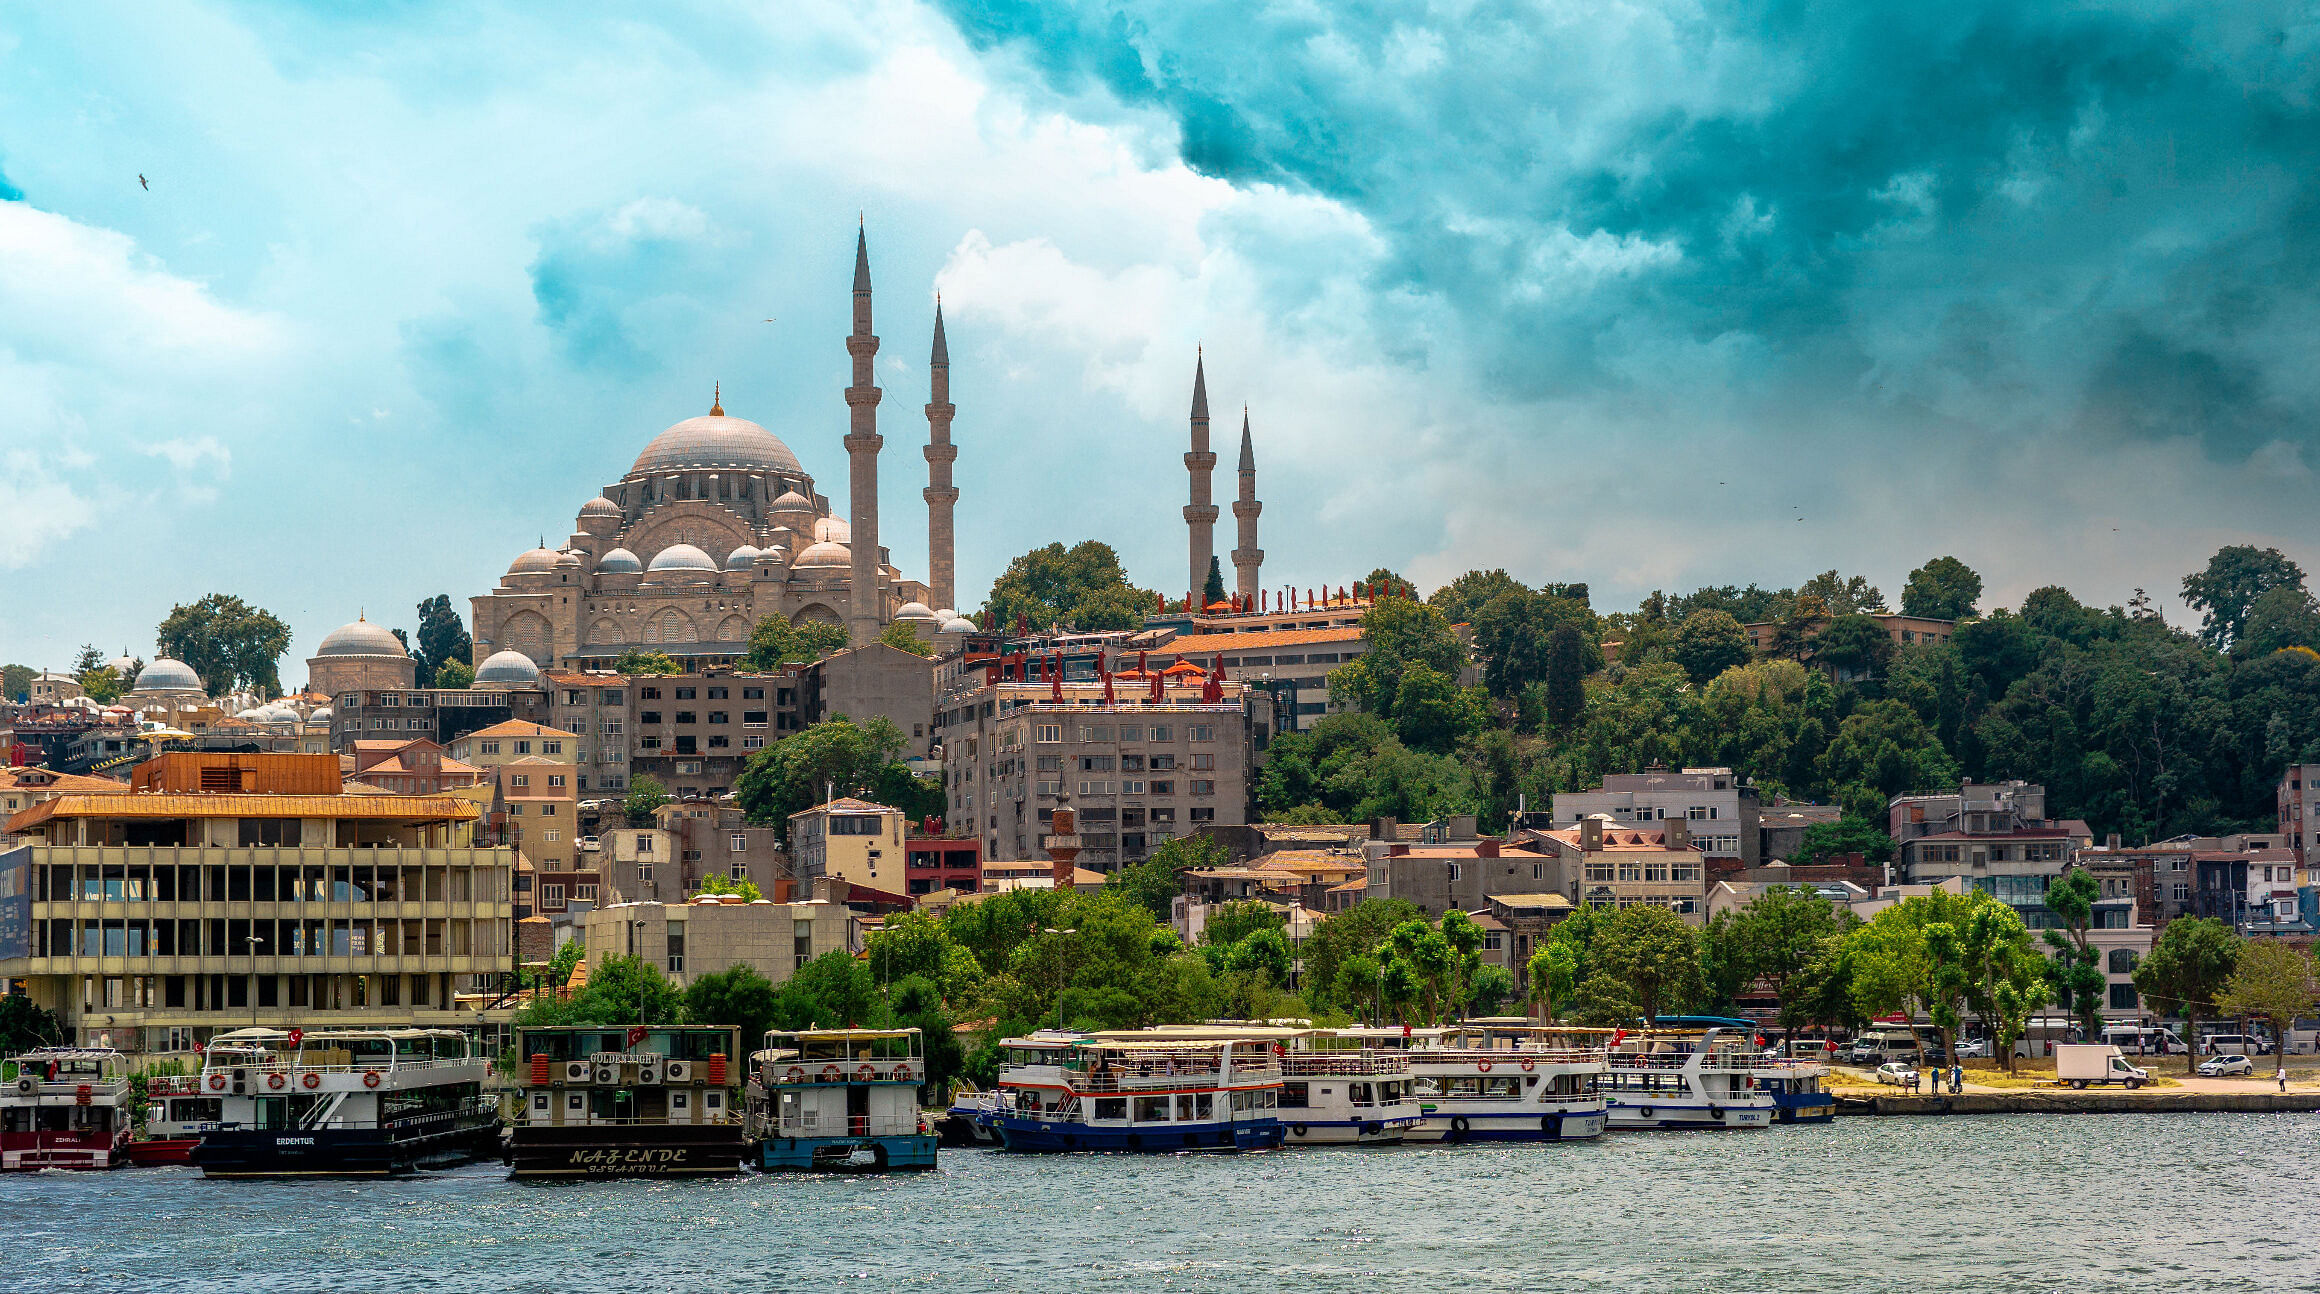 River view of Hagia Sofia in Istanbul, Turkey 